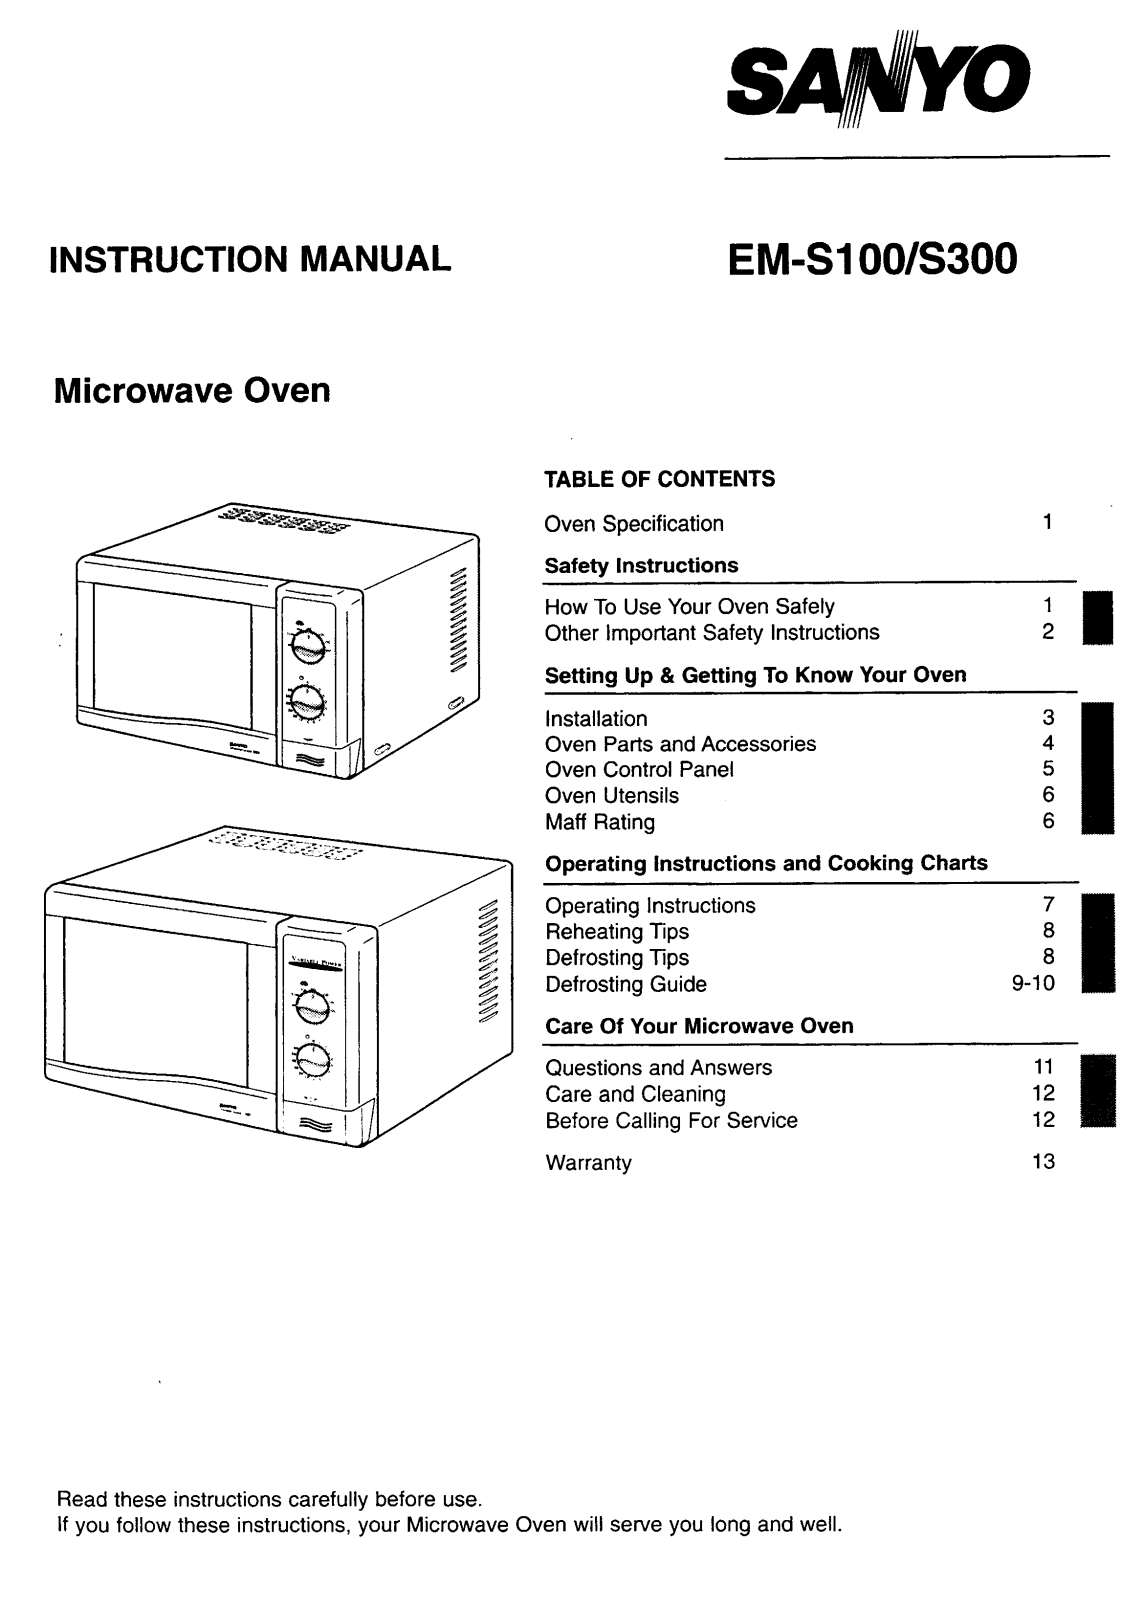 Sanyo EM-S100 Instruction Manual